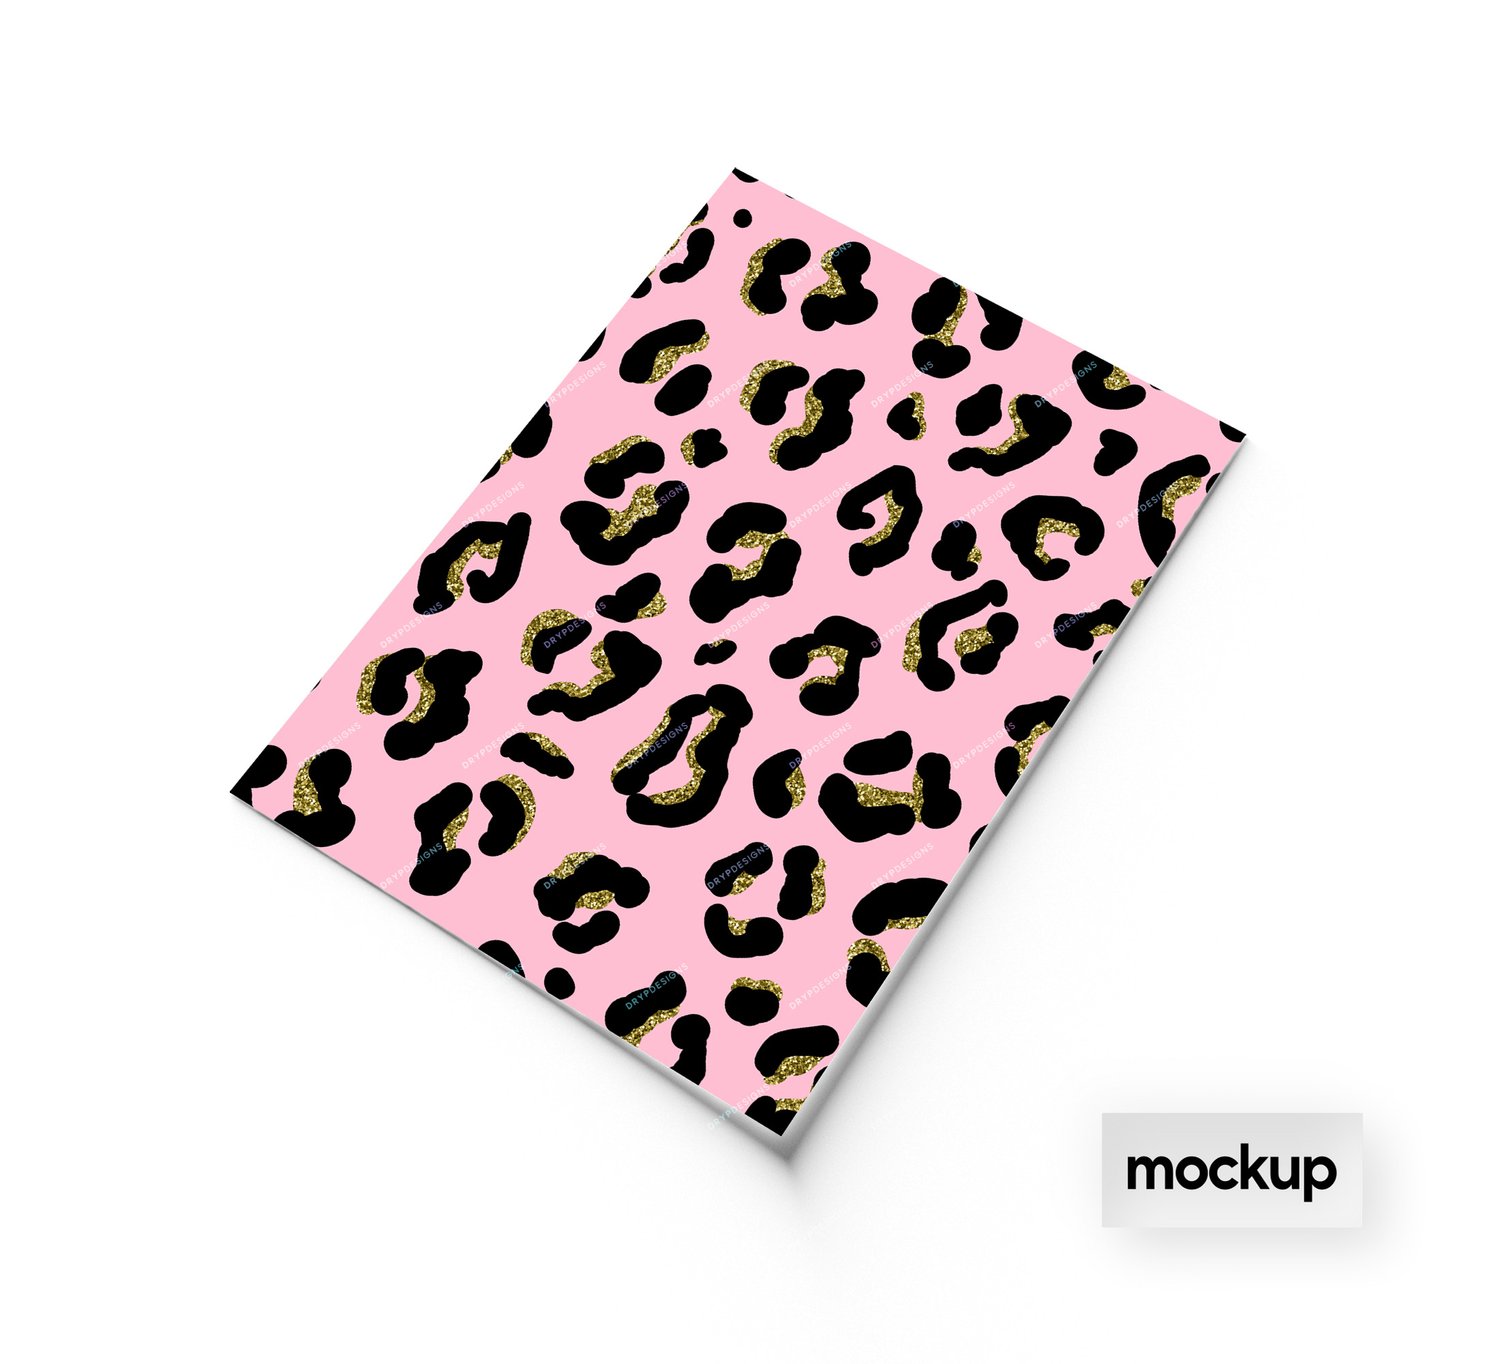 Hot Pink Leopard Print Glitter Tape - 15mm x 5m - Craft Supply Planner –  MindTheWrap